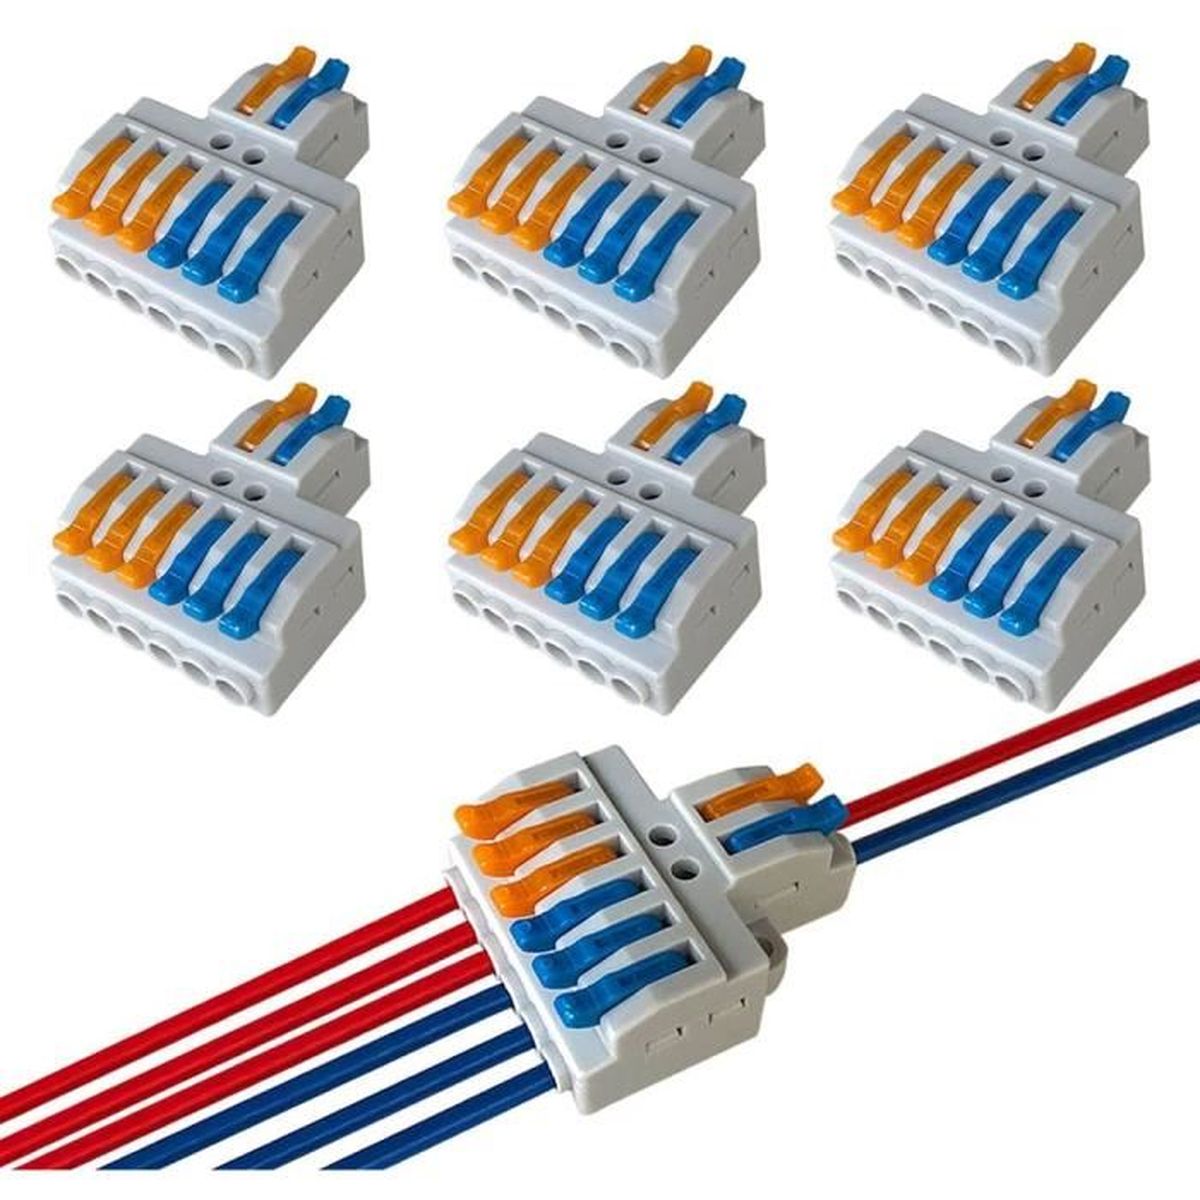 https://www.cdiscount.com/pdt2/0/7/4/1/1200x1200/auc0729270426074/rw/2-en-6-sorties-conducteur-fil-connecteurs-boite-d.jpg